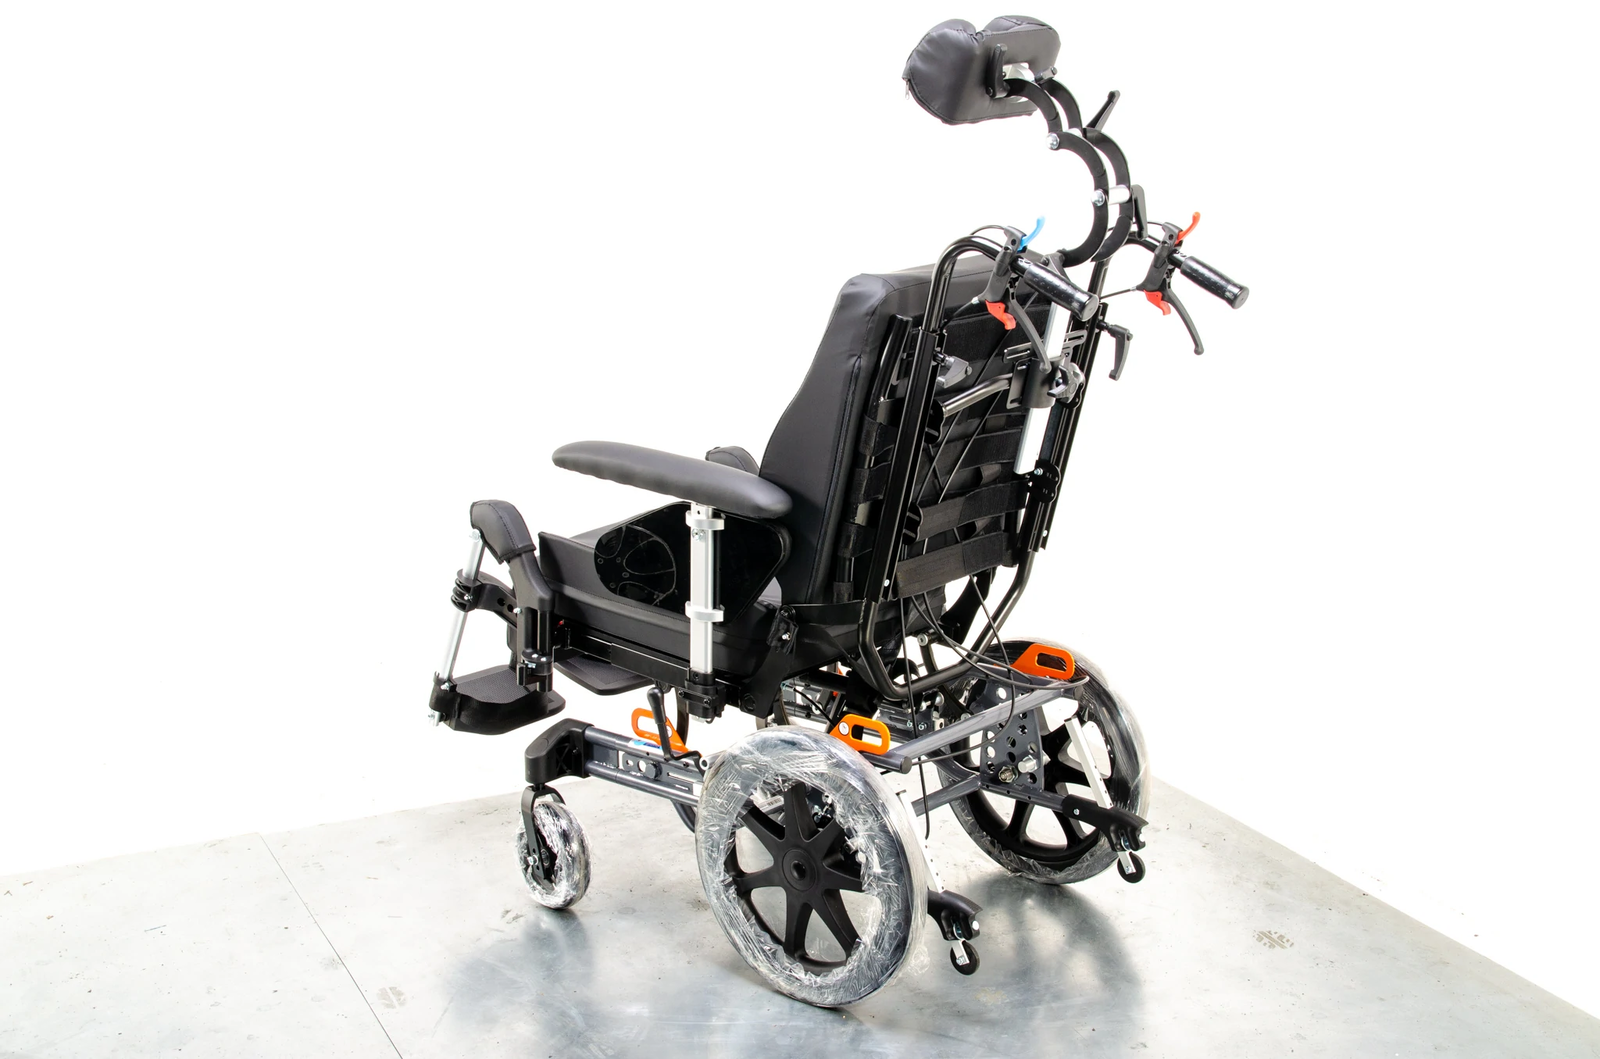 Ultimate Healthcare Gravity II Tilt in Space Attendant Manual Posture Wheelchair - Rea Azalea Clematis